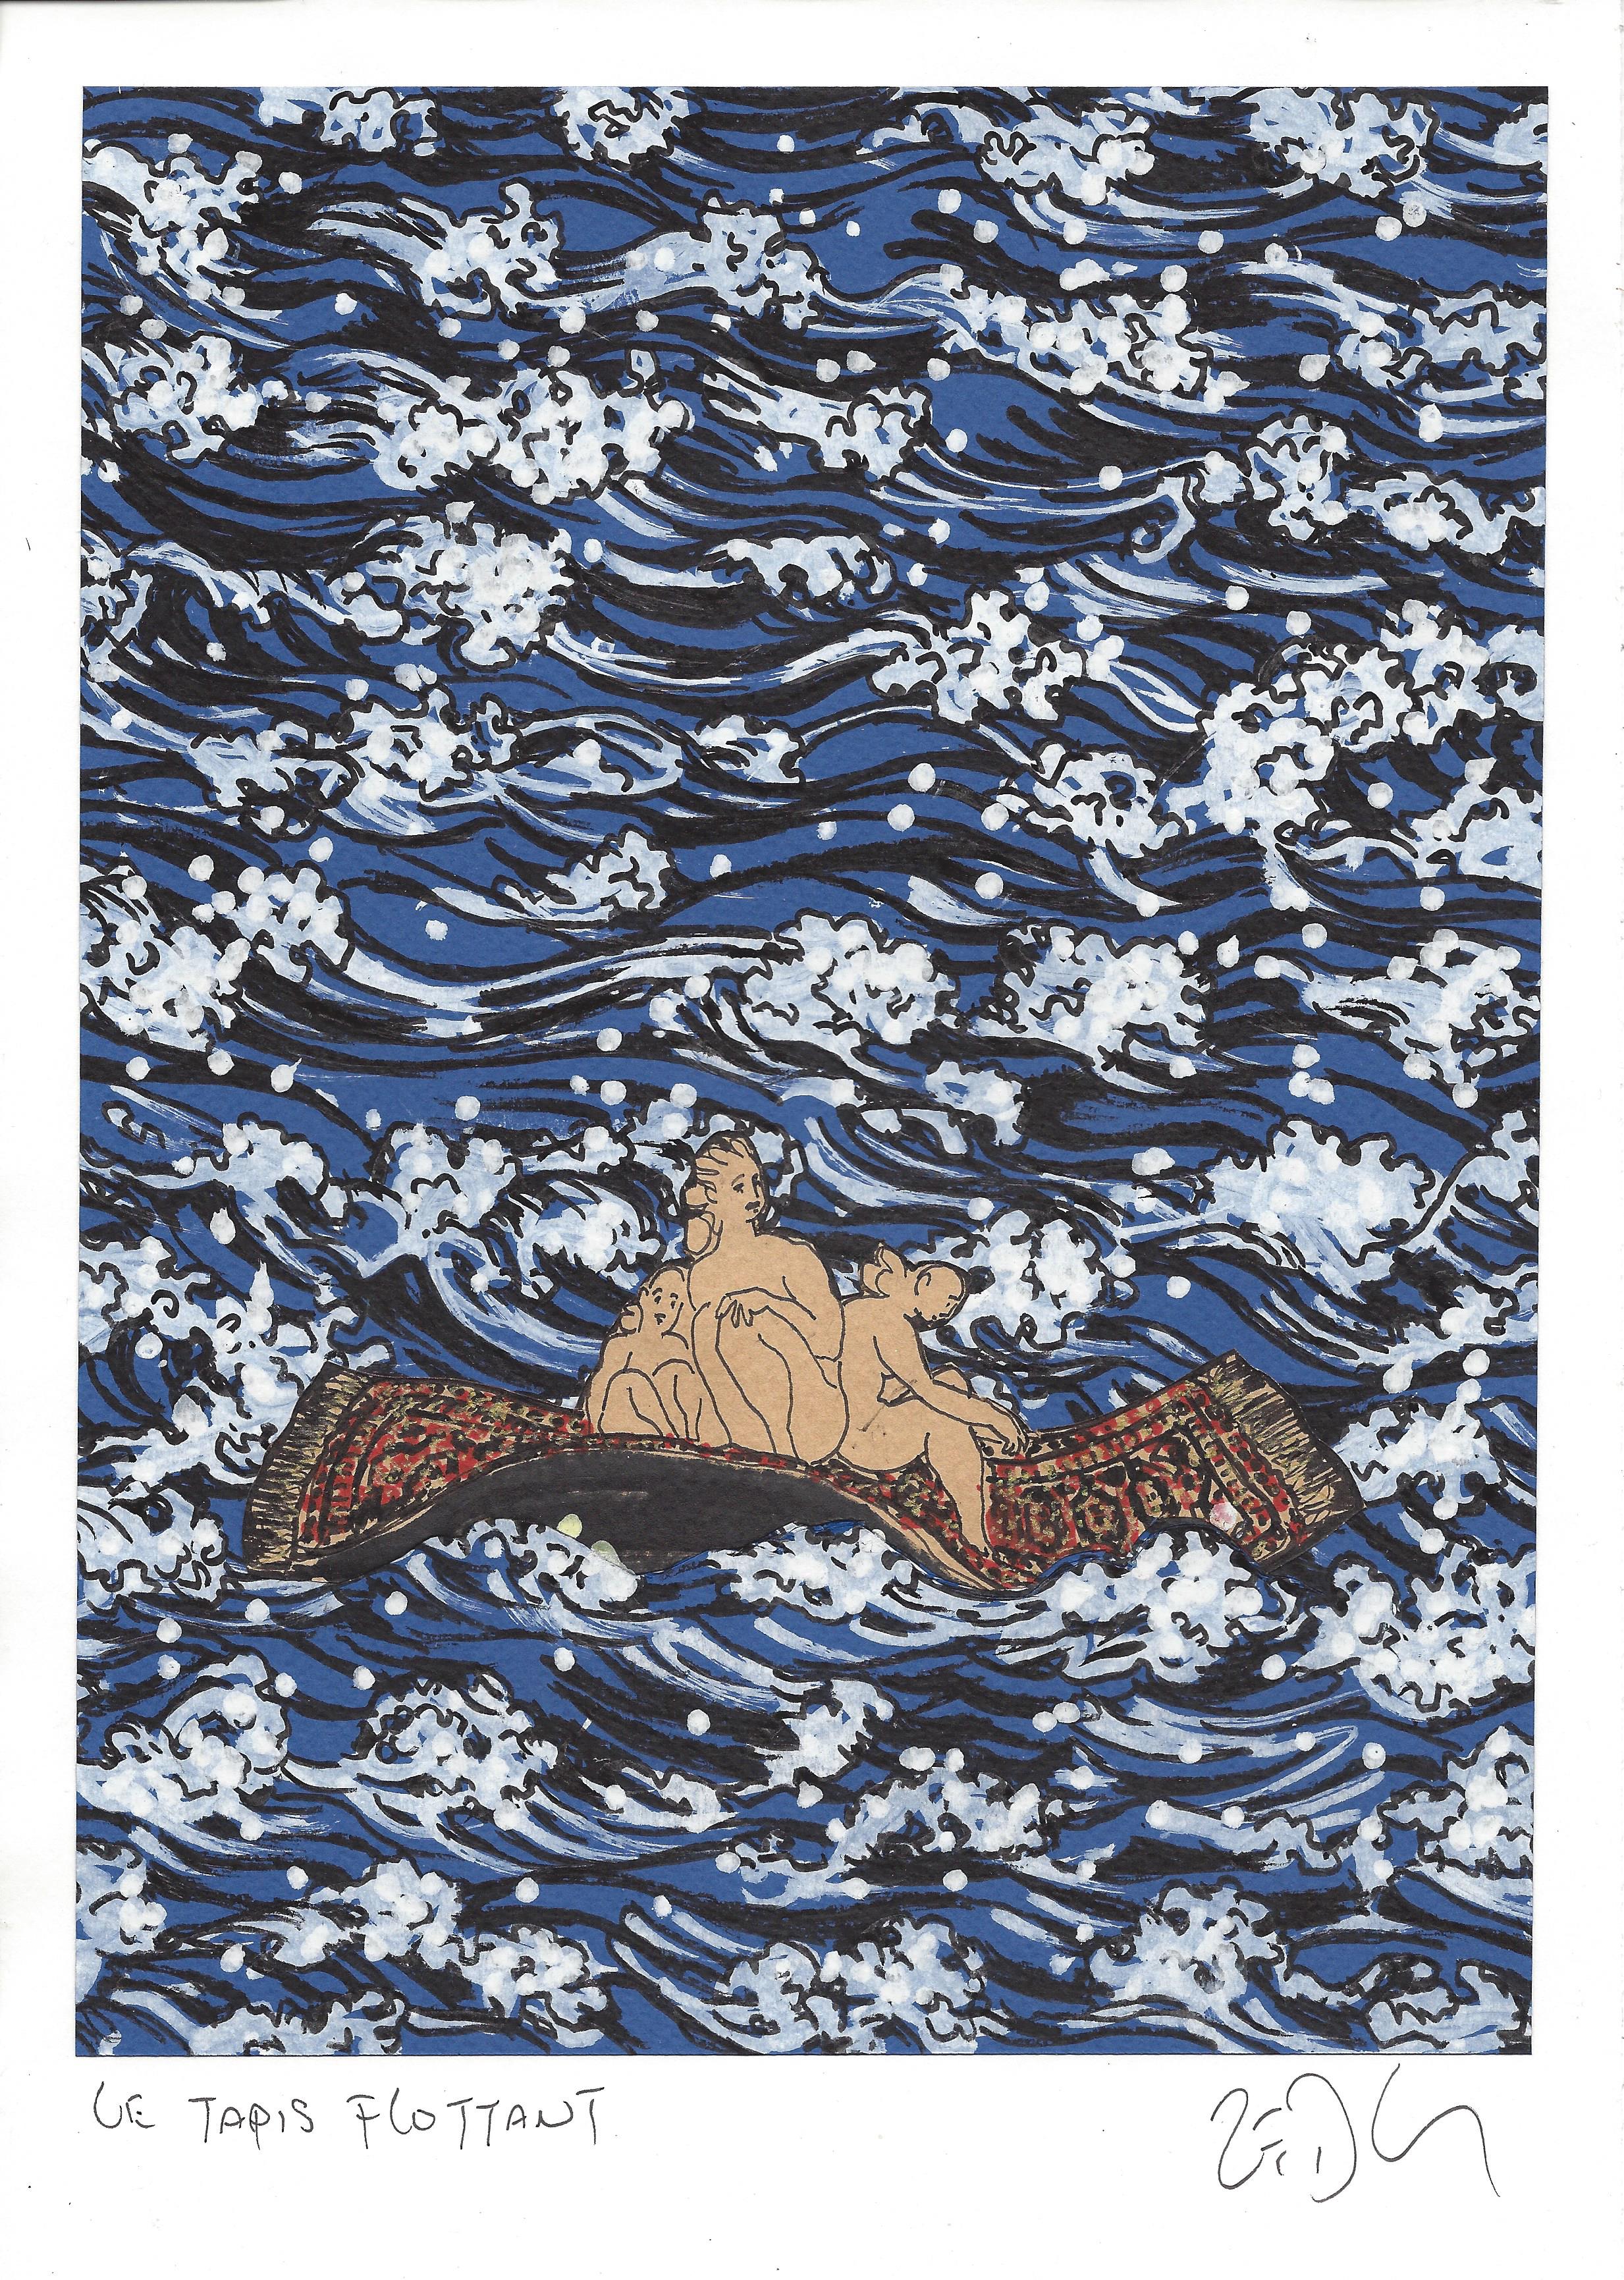 « The floating carpet – Le tapis flottant »